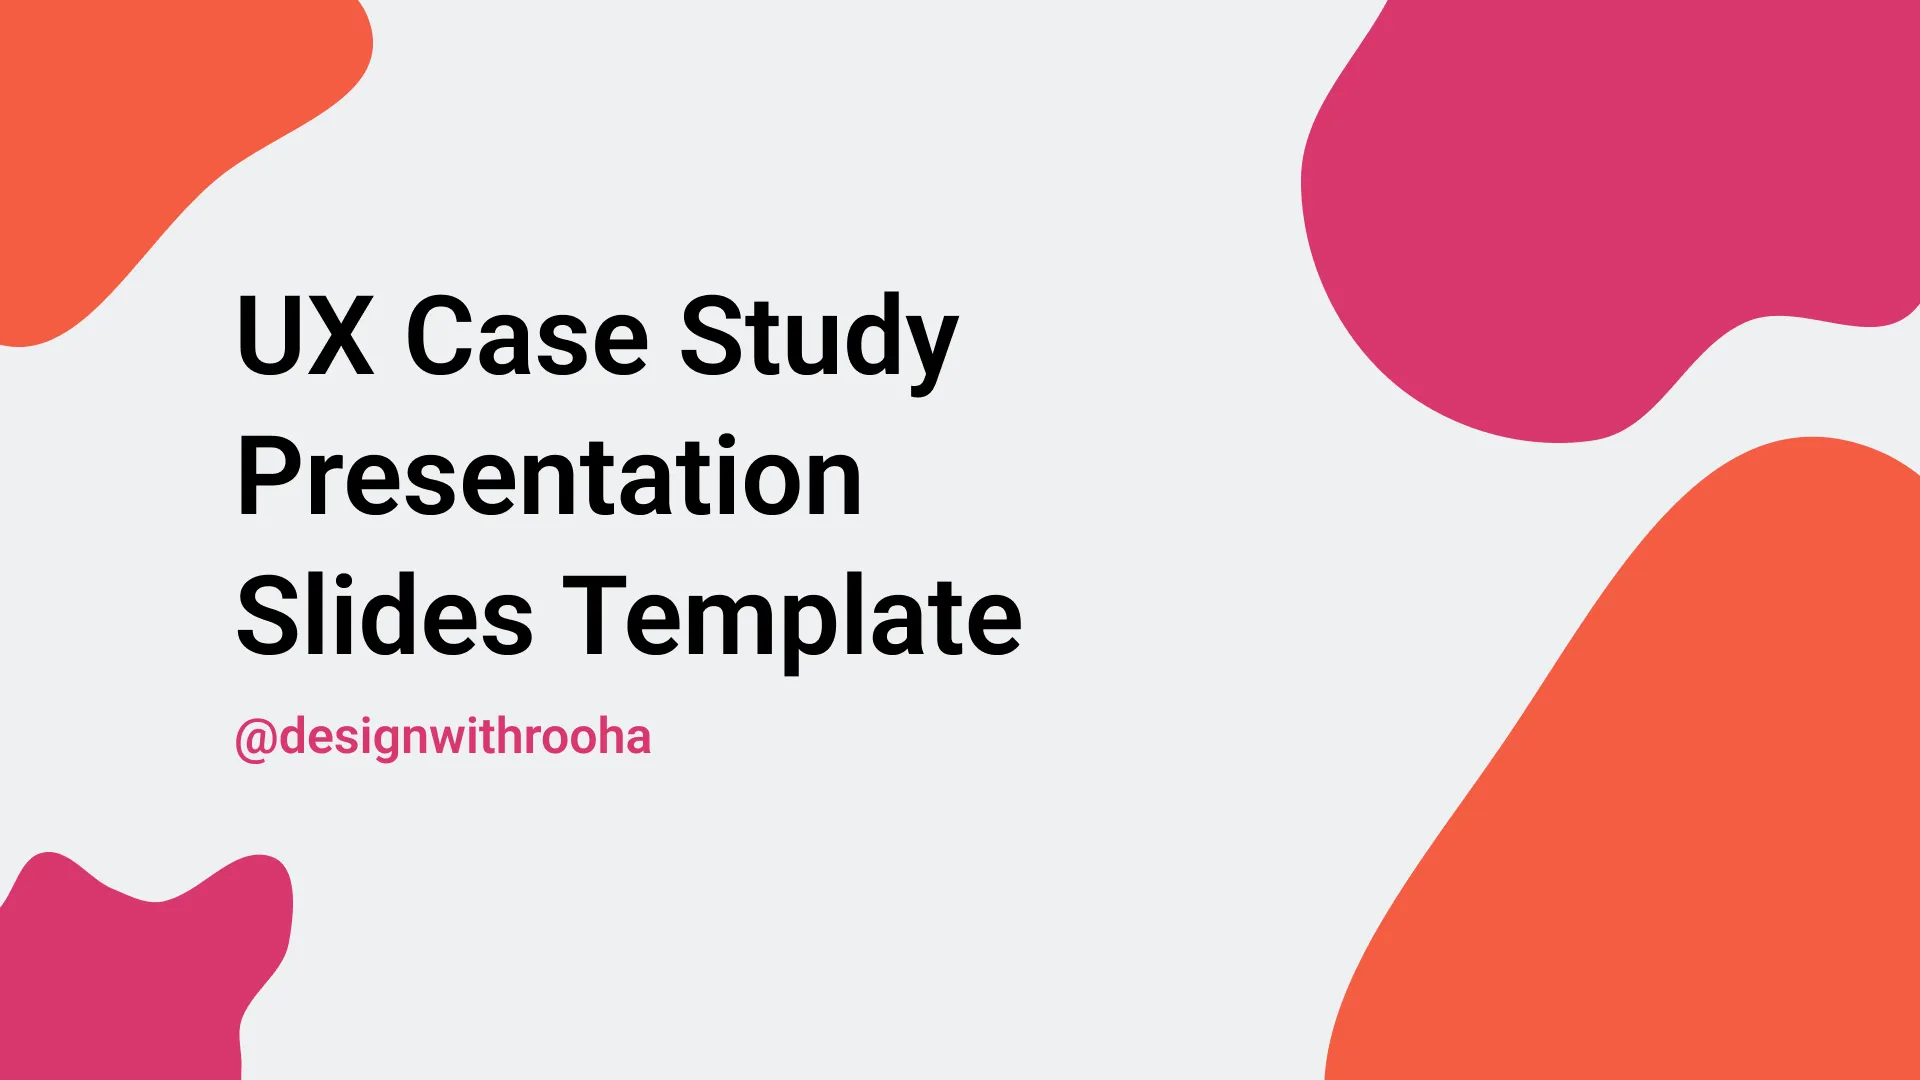 UX Case Study Presentation Template Community